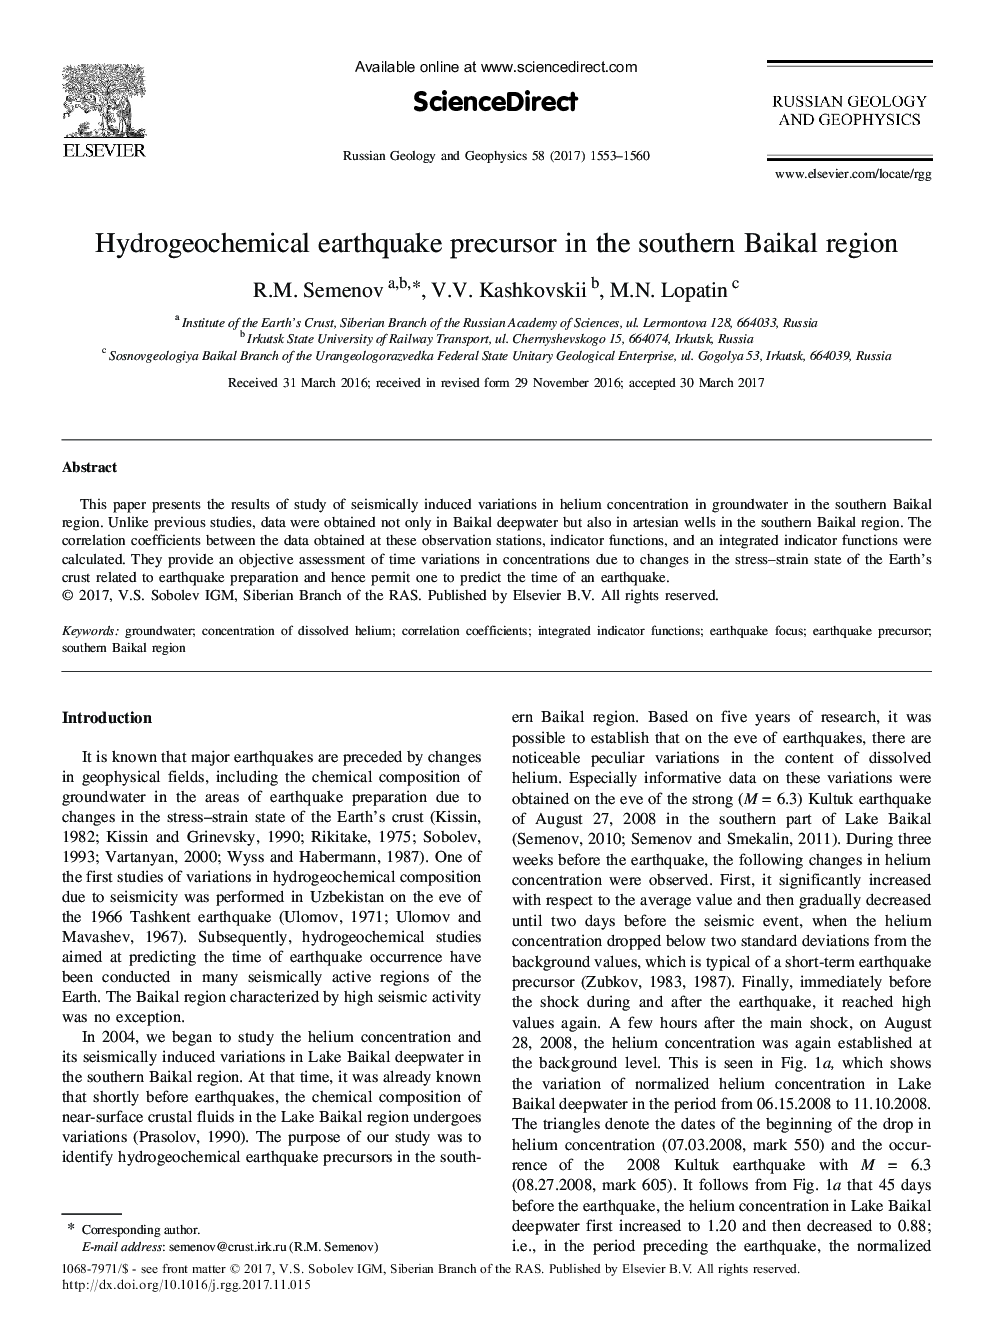 Hydrogeochemical earthquake precursor in the southern Baikal region